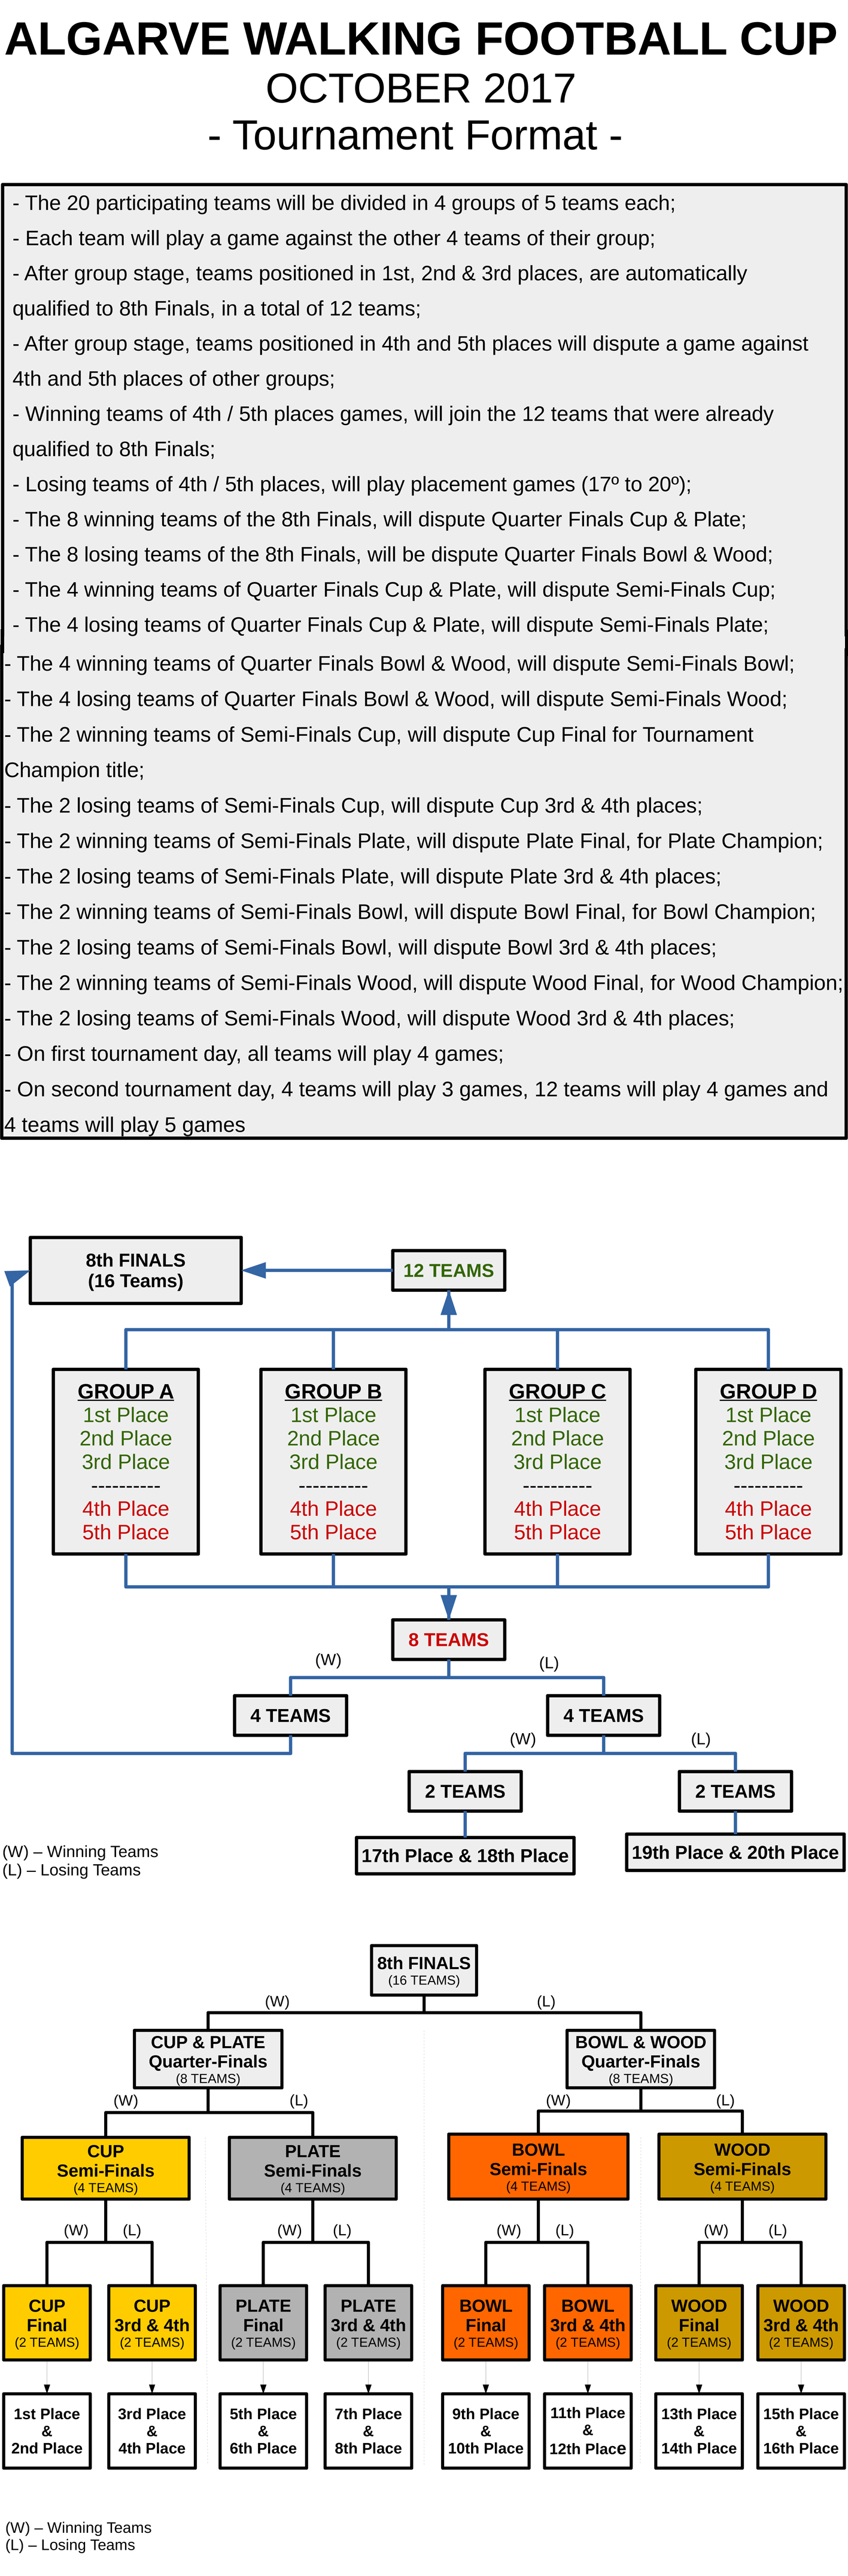 Format for the Vilamoura tournament